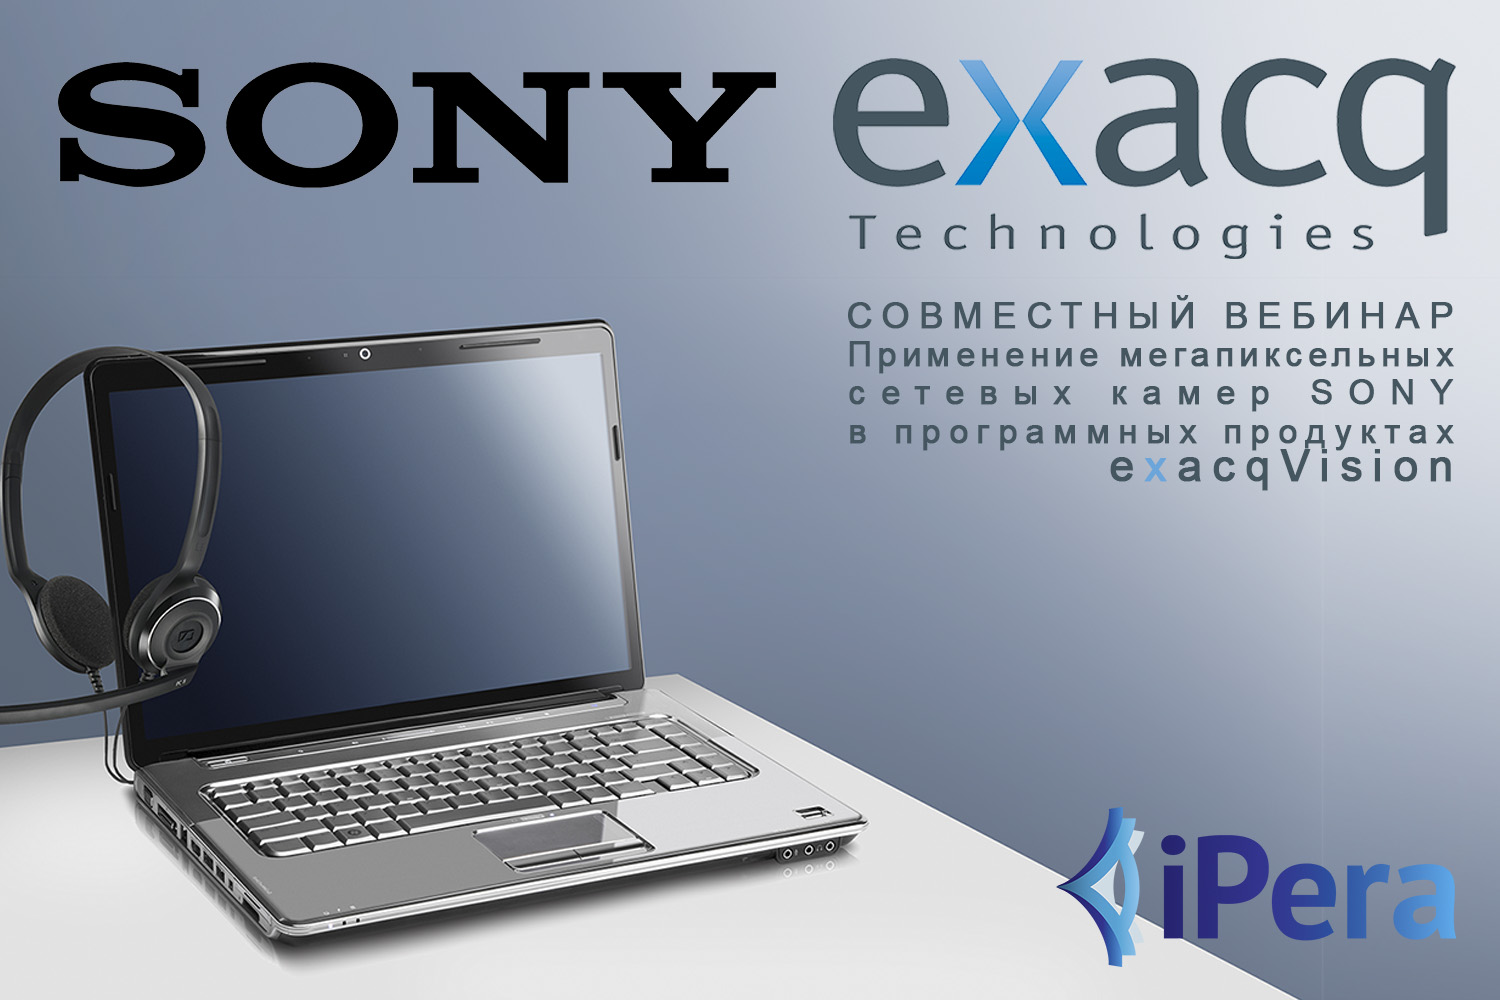 Sony Exacq.jpg